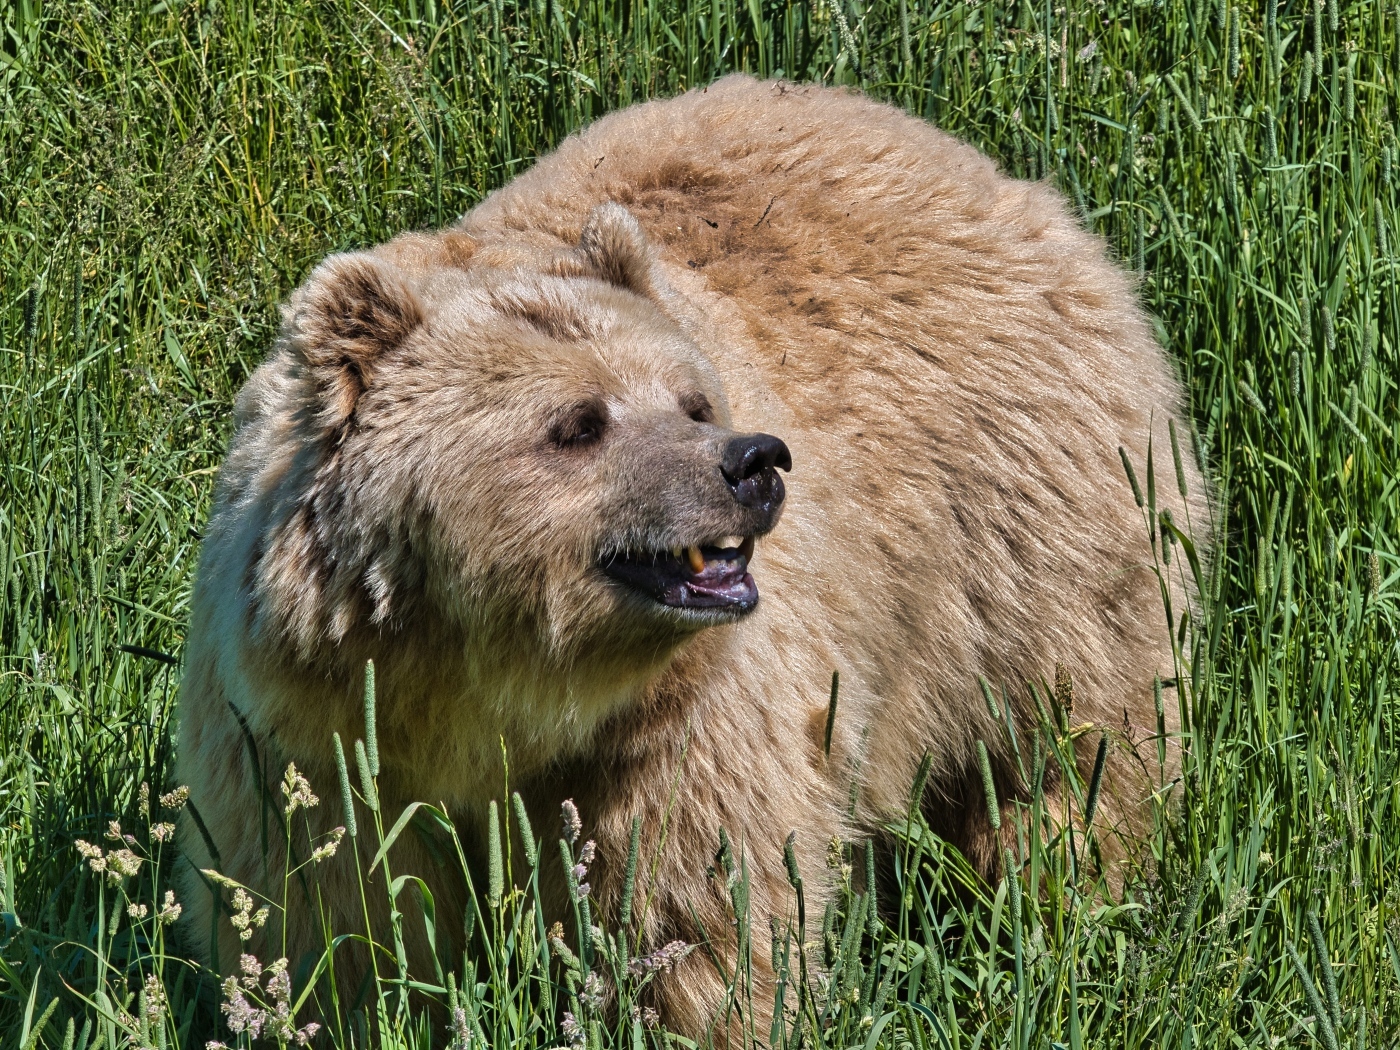 Big brown bear in green grass